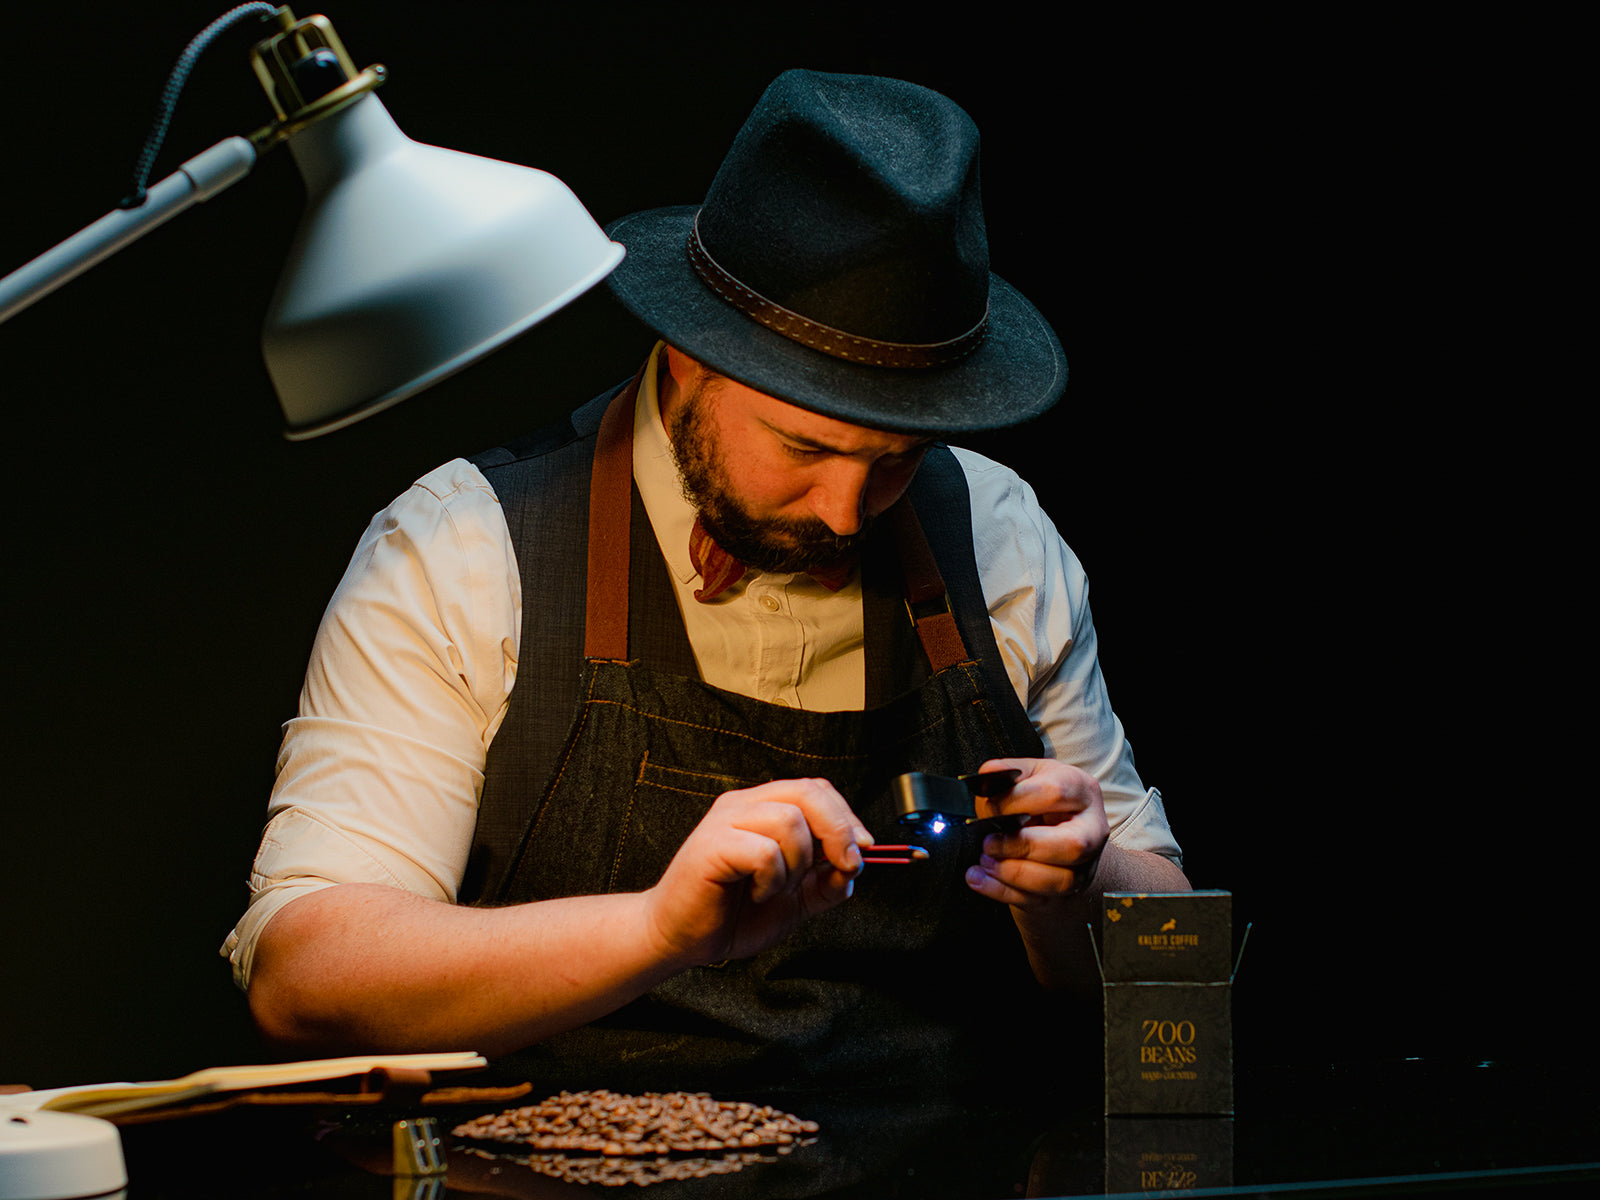 A roaster examines a single coffee bean